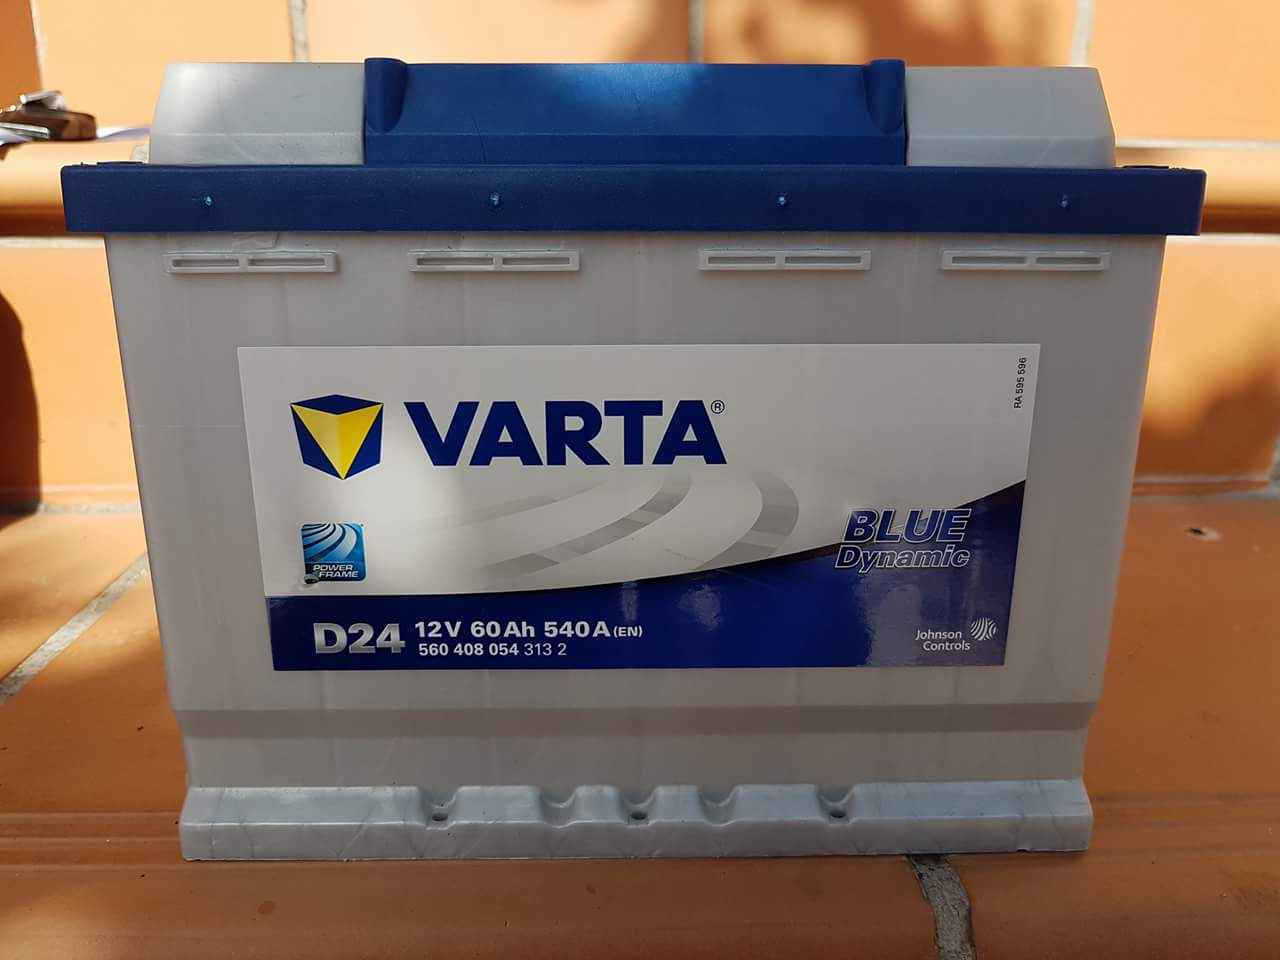 VARTA BLUE dynamic 560 408 054 3132 D24 12Volt 60Ah Starterbatterie